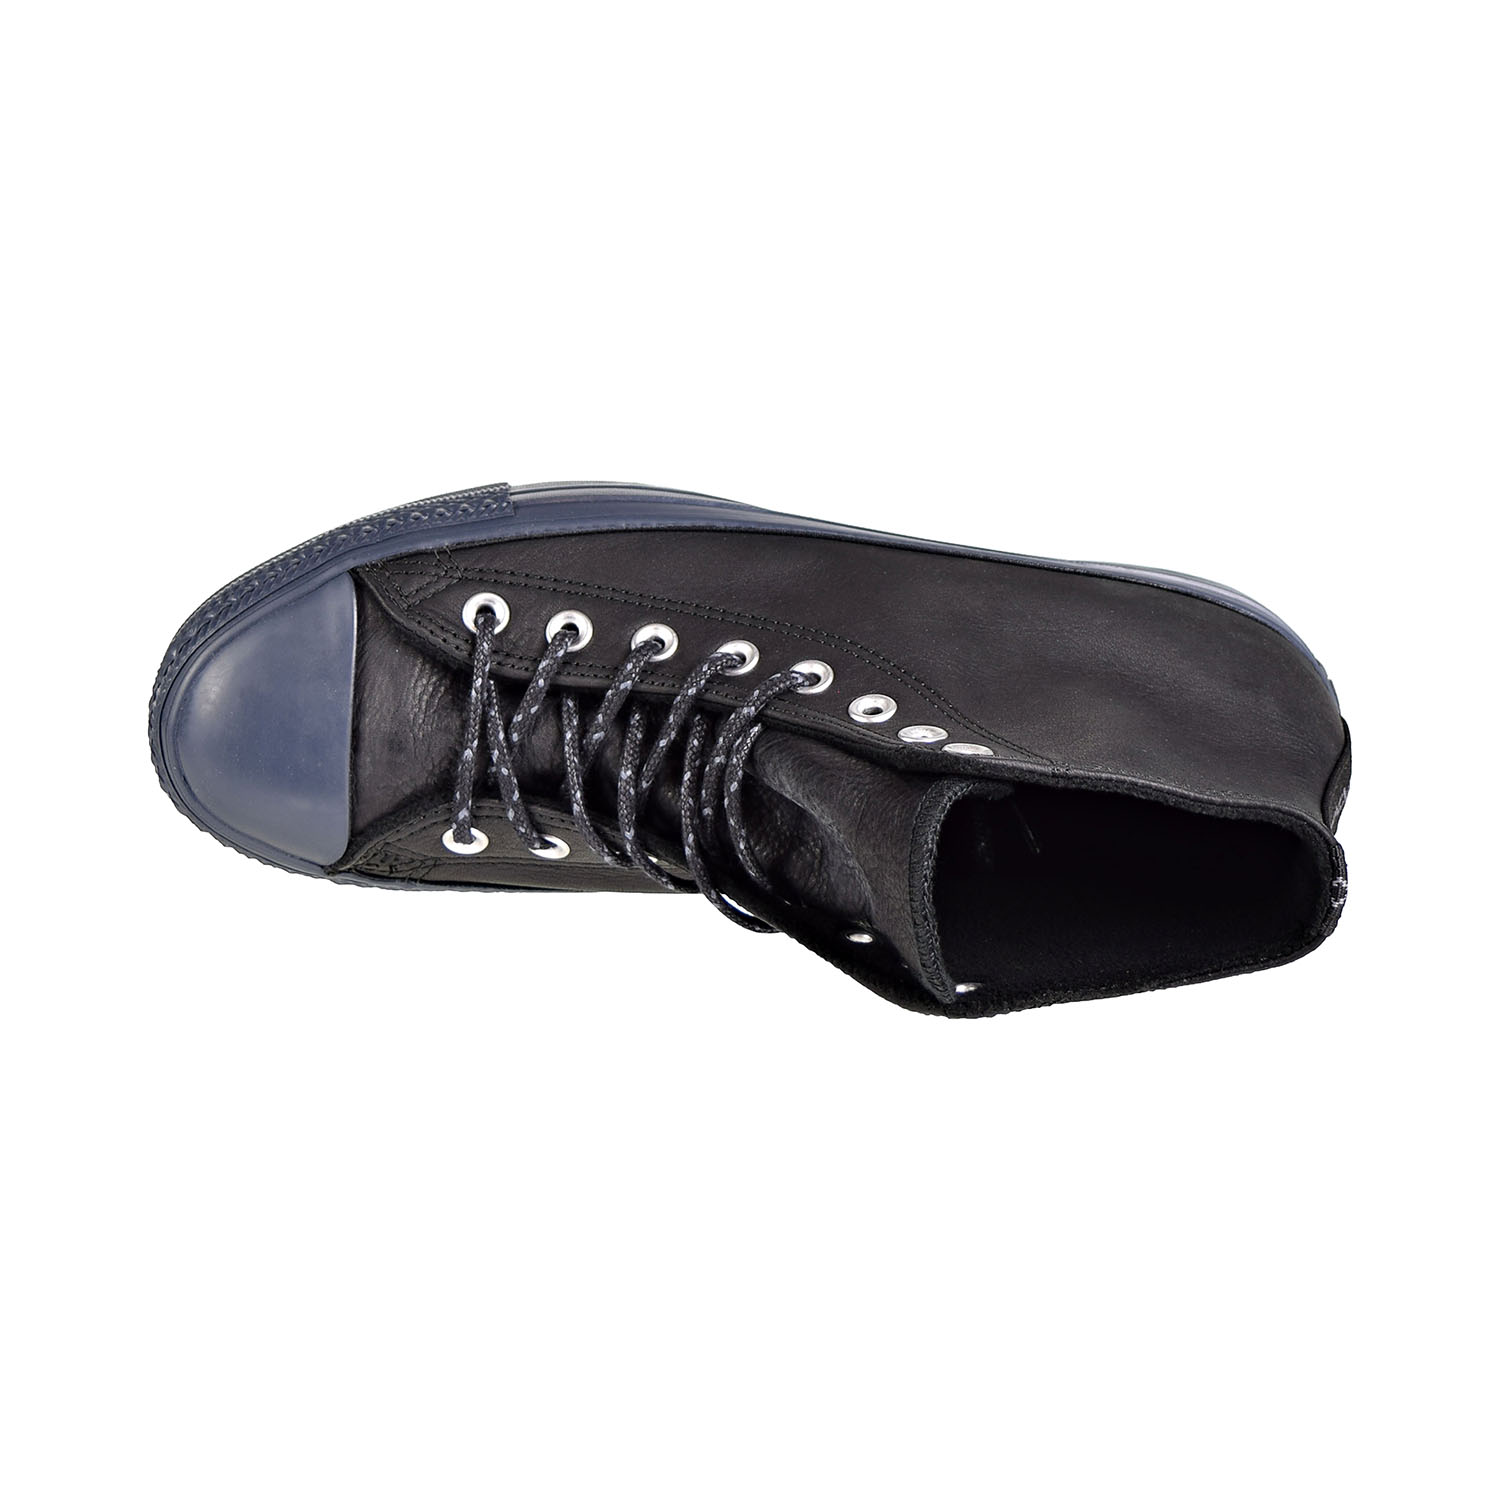 Converse Chuck Taylor All Star Hi Thermal Men's Shoes Black-Sharkskin 157514c - image 5 of 6